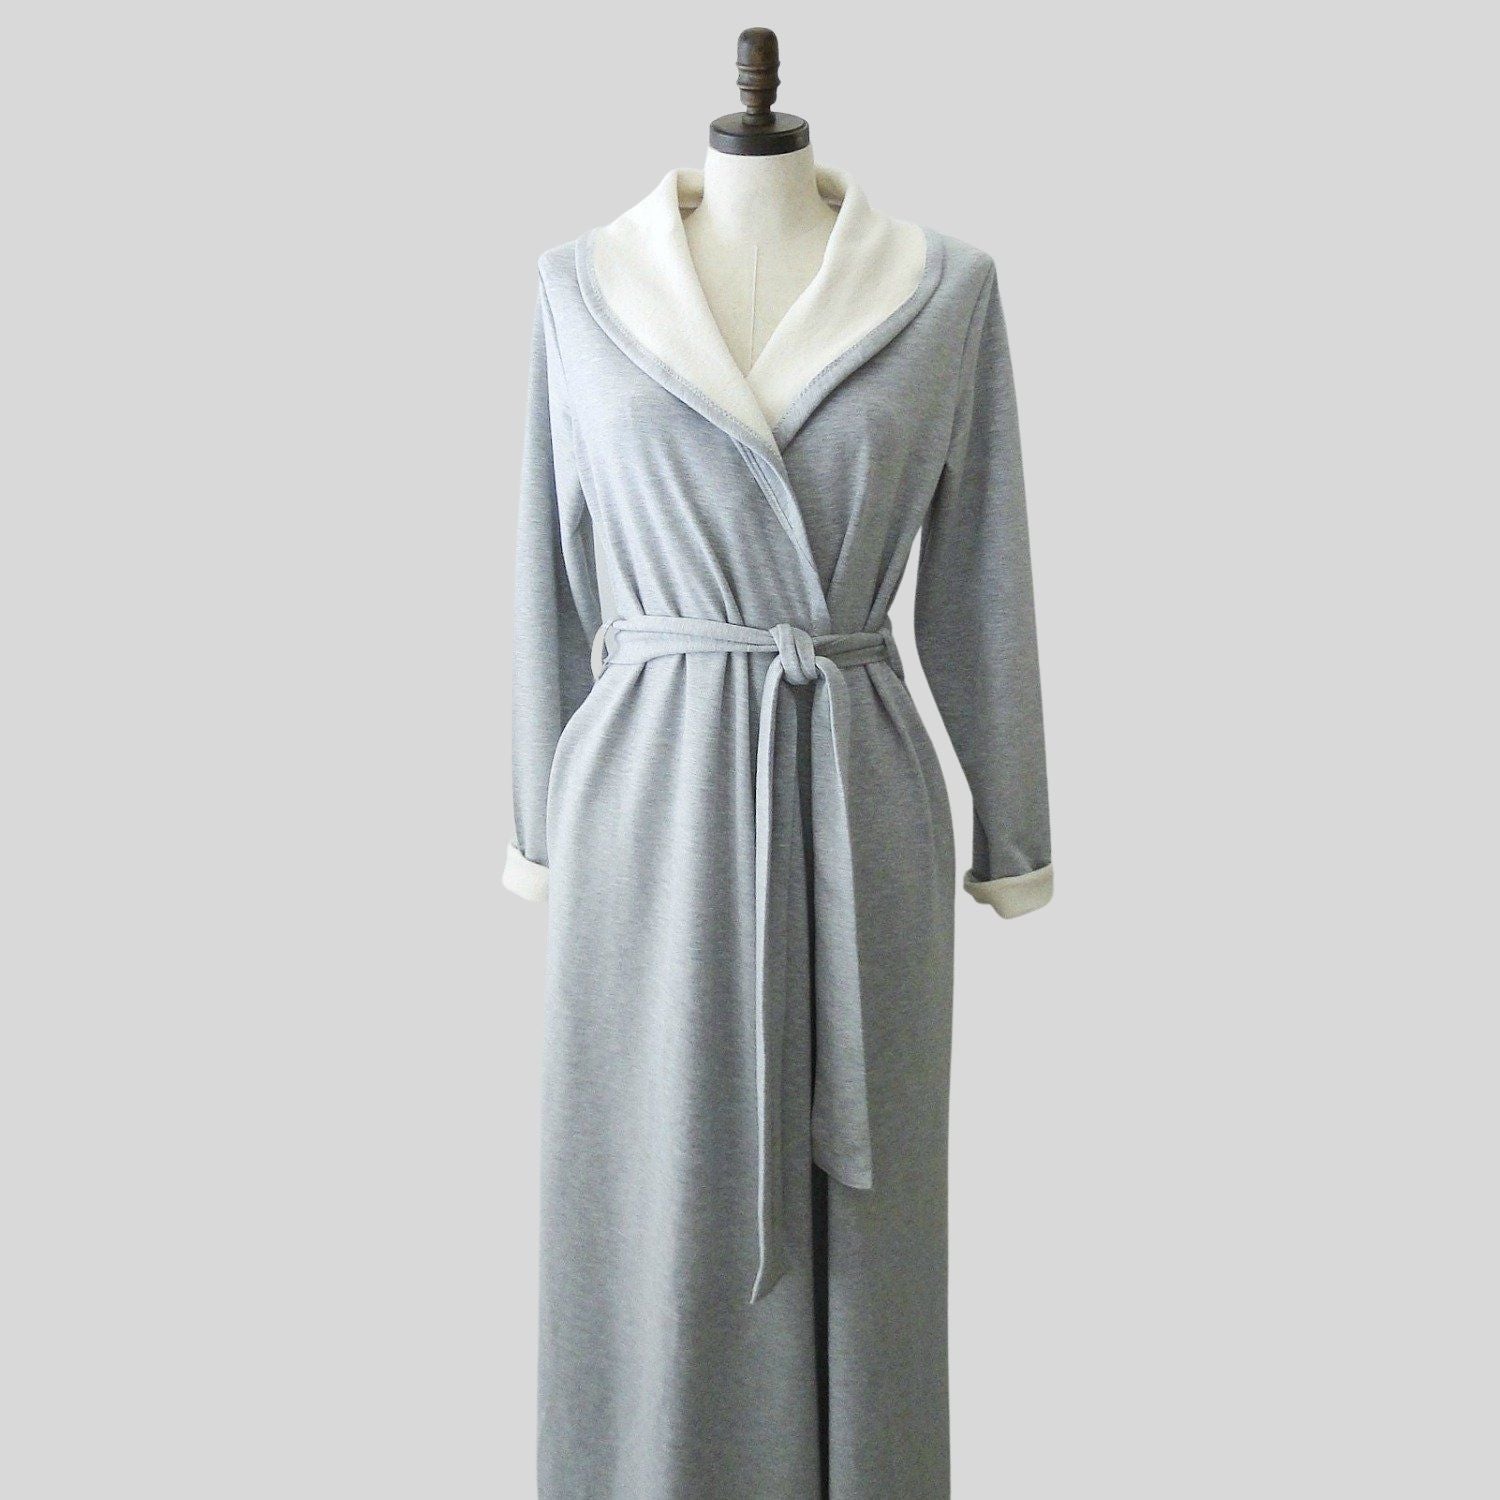 Long grey bathrobe for women | Made in Canada bathrobe with pockets | Organic cotton bathrobe for women | Econica 